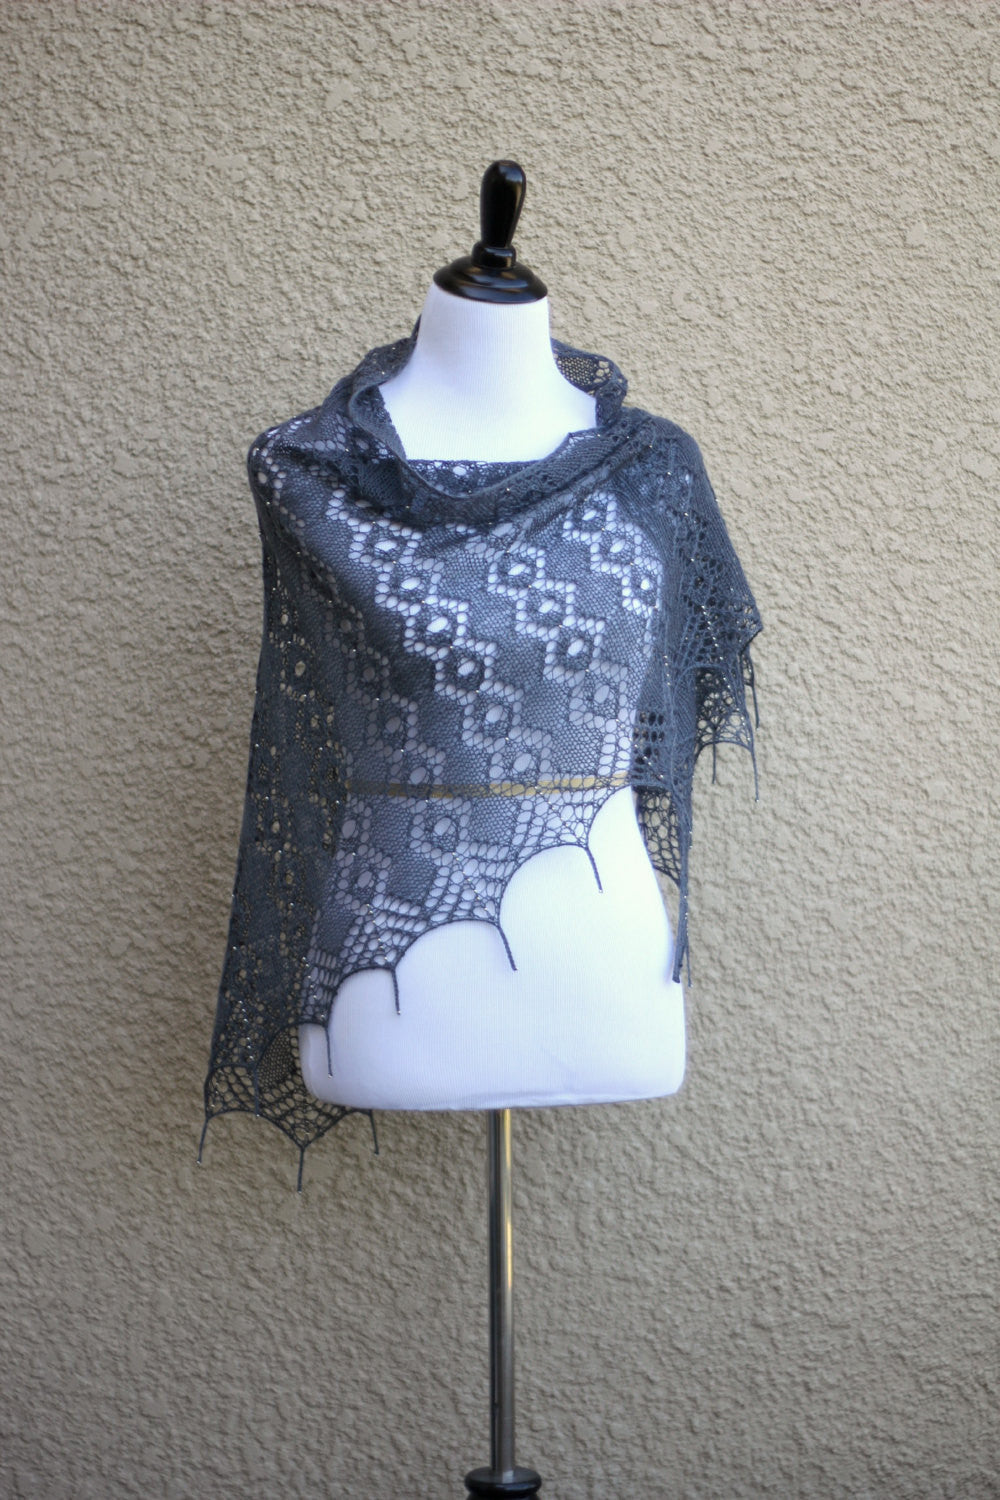 Morning Dew shawl knitting pattern